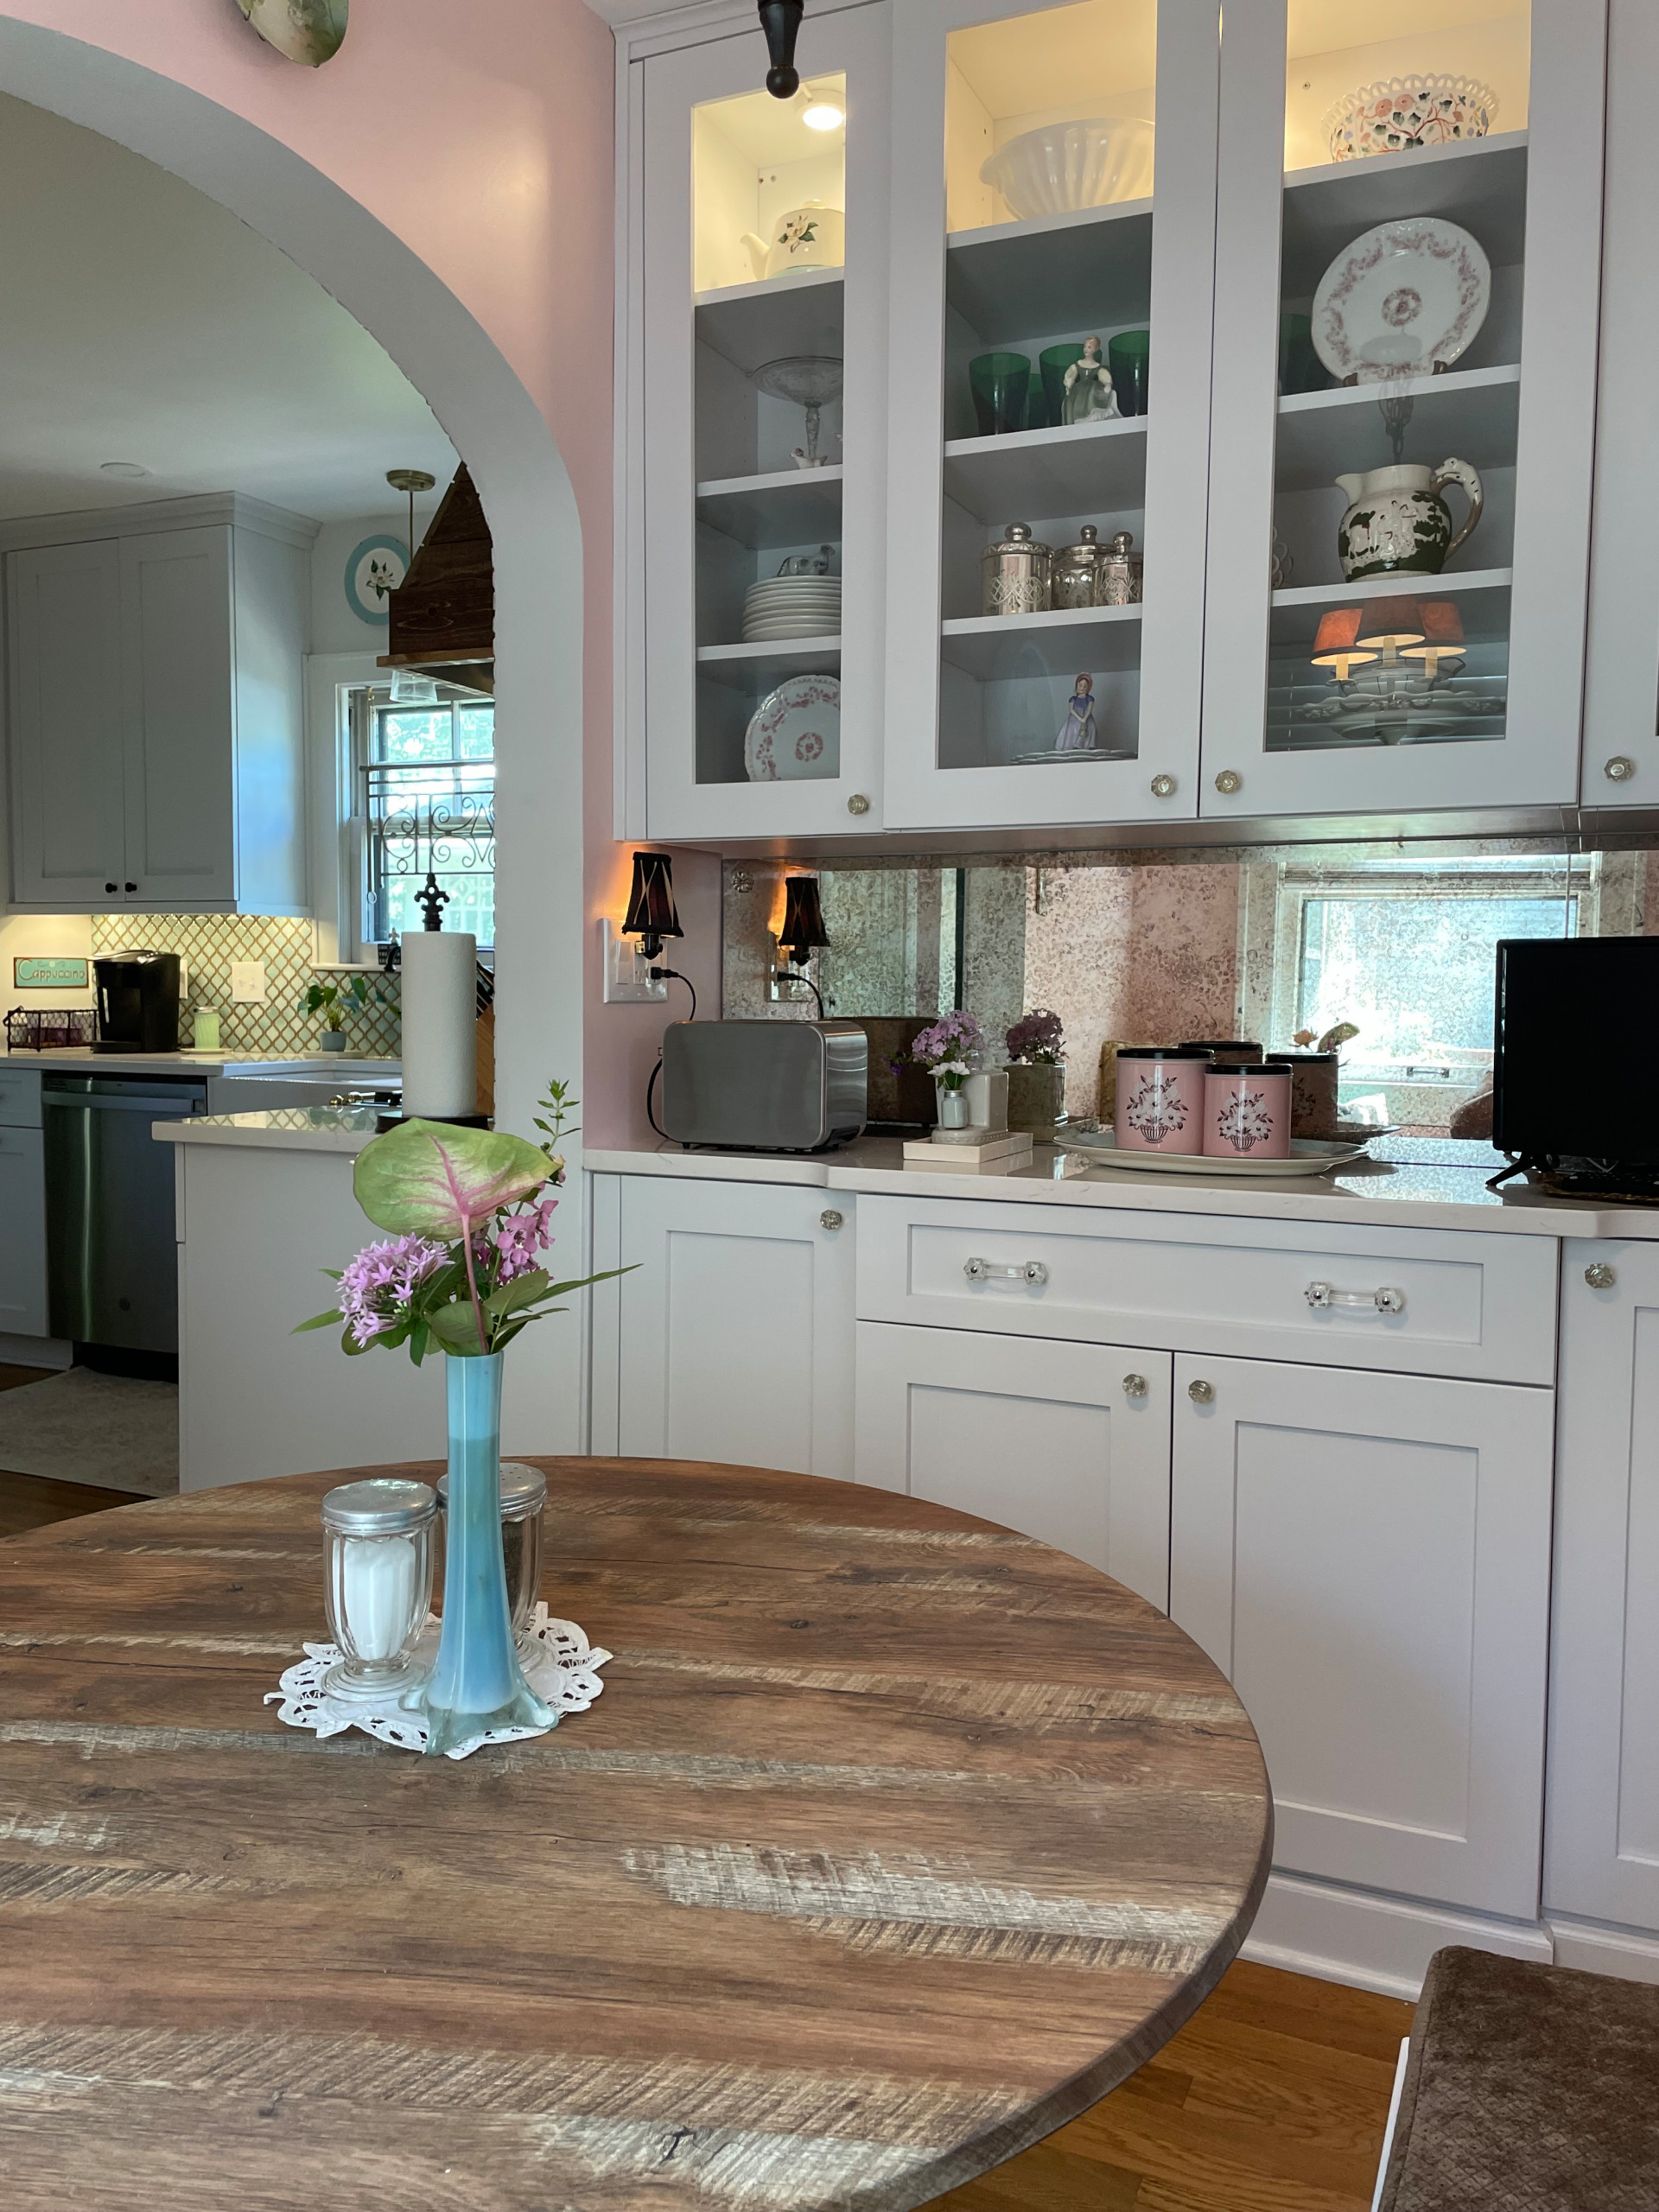 Barnet Kitchen Remodel (design collaboration with Owner)